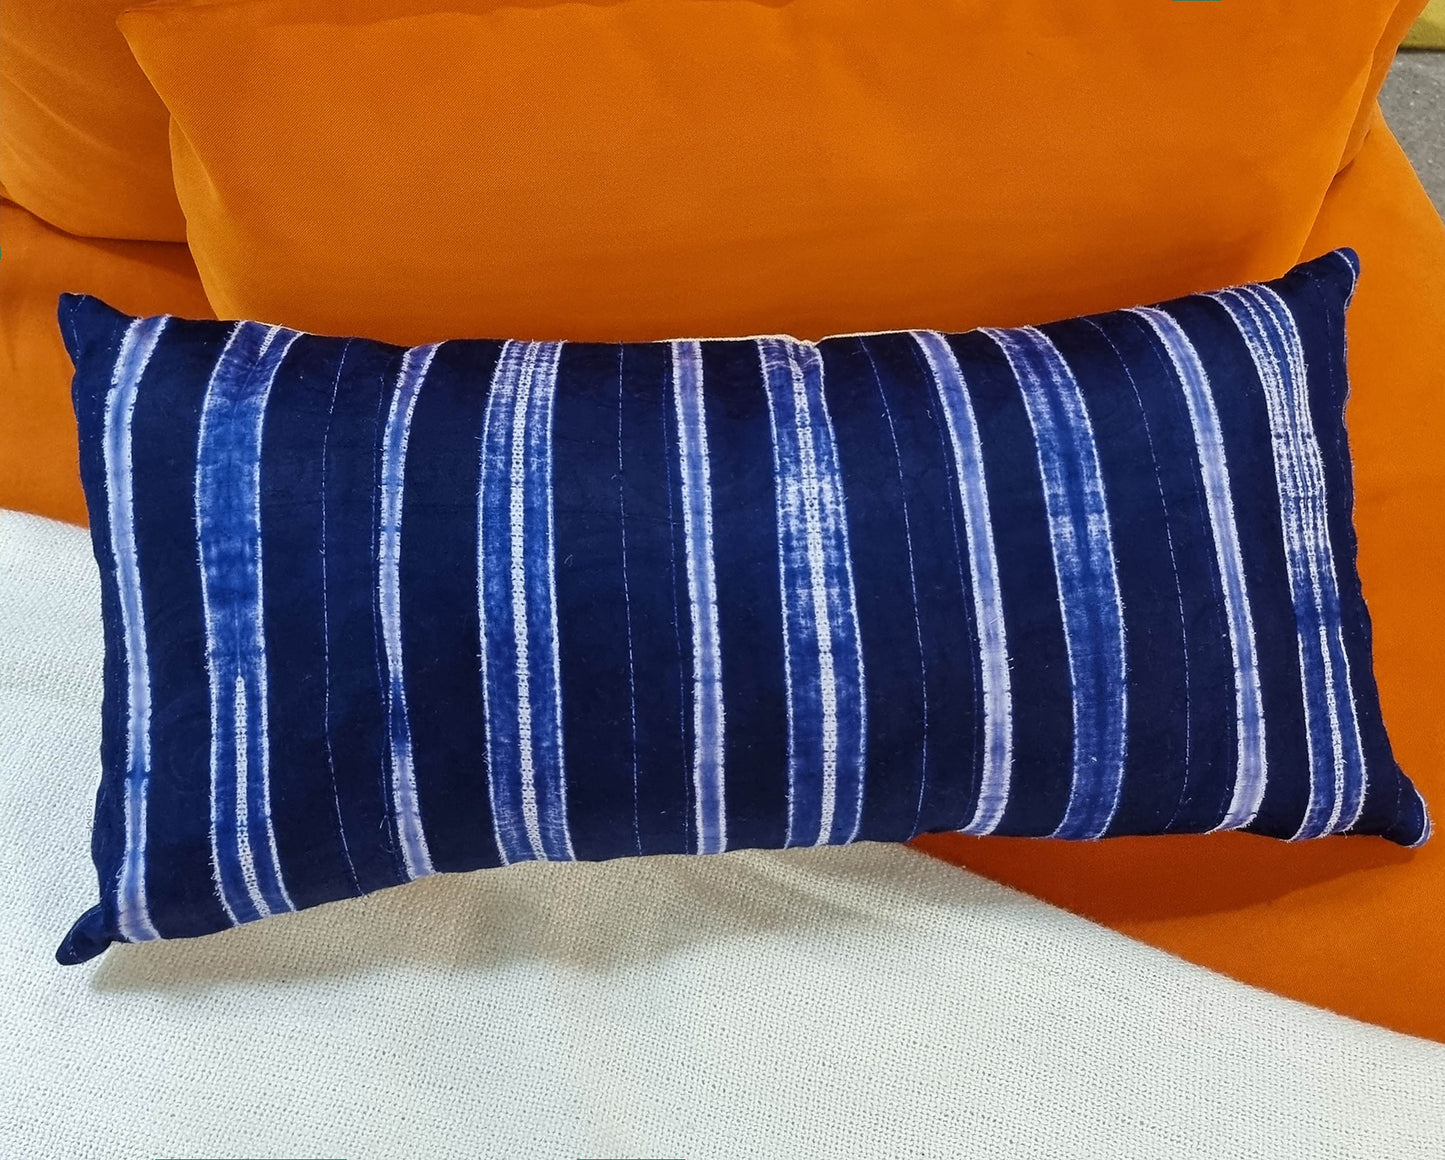 Coastal Blue, white and blue stripe rectangle lumbar cushion on orange sofa chair.